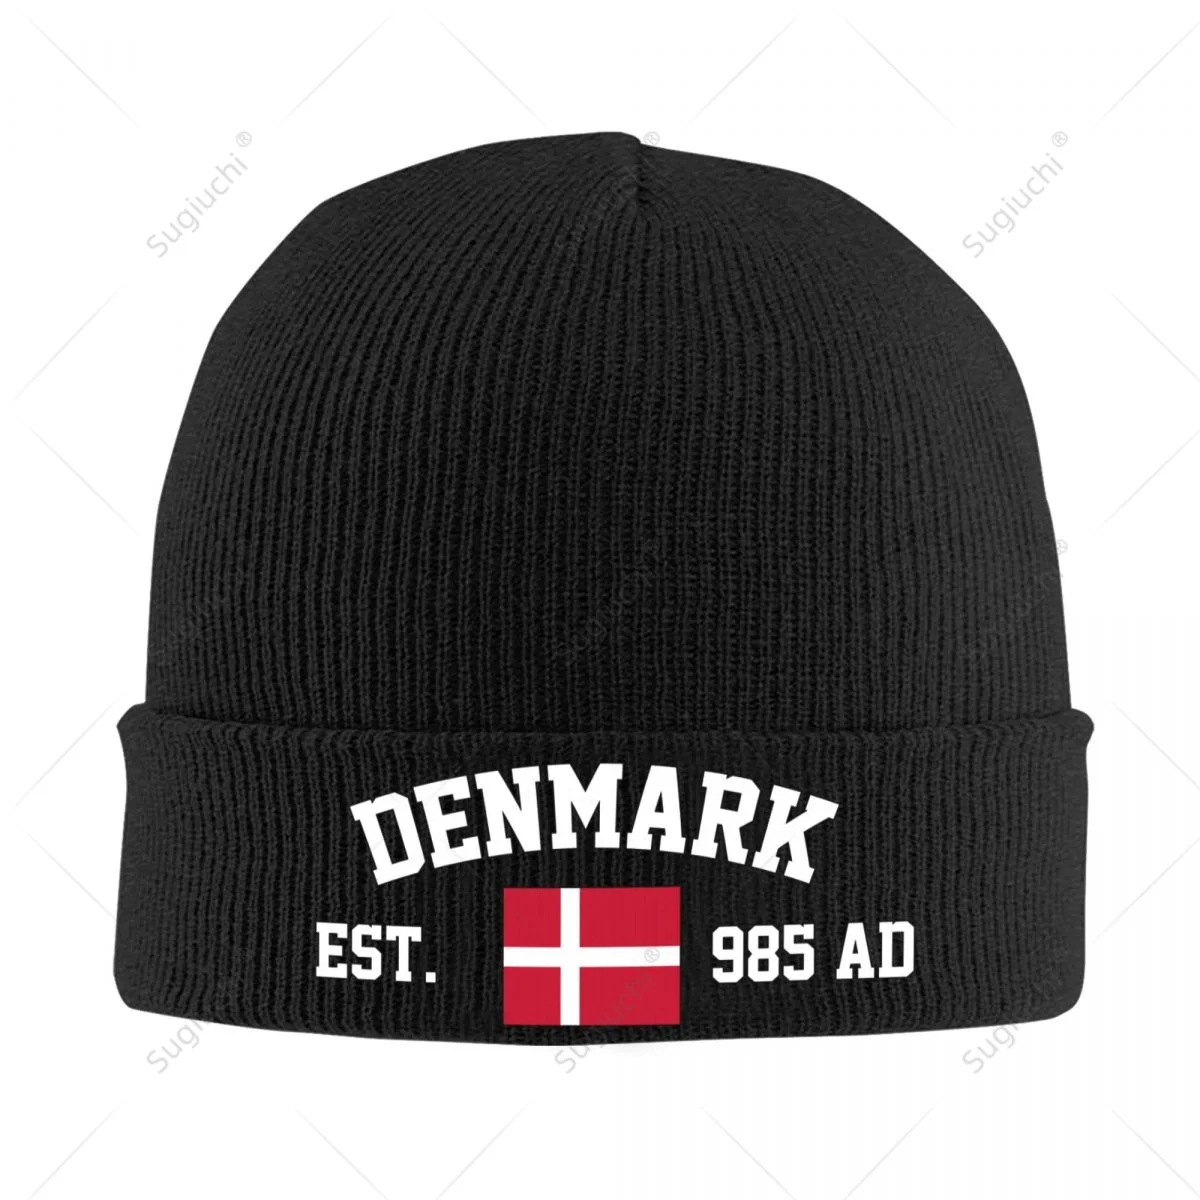 

Unisex Denmark EST.985 AD Knitted Hat For Men Women Boys Winter Autumn Beanie Cap Warm Bonnet